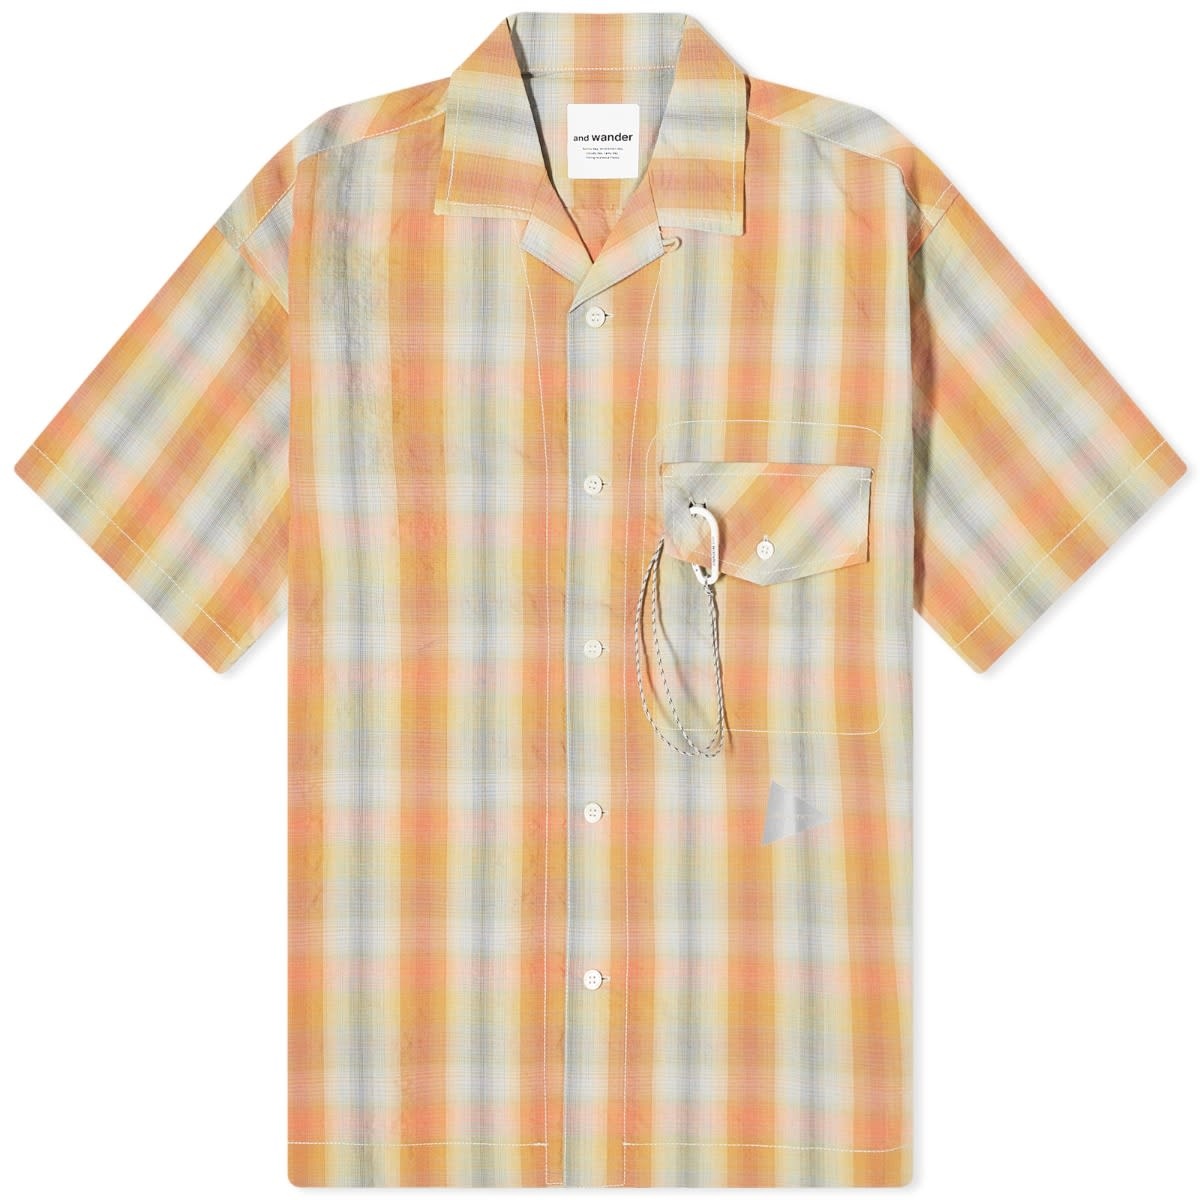 and wander Dry Check Short Sleeve Shirt - 1